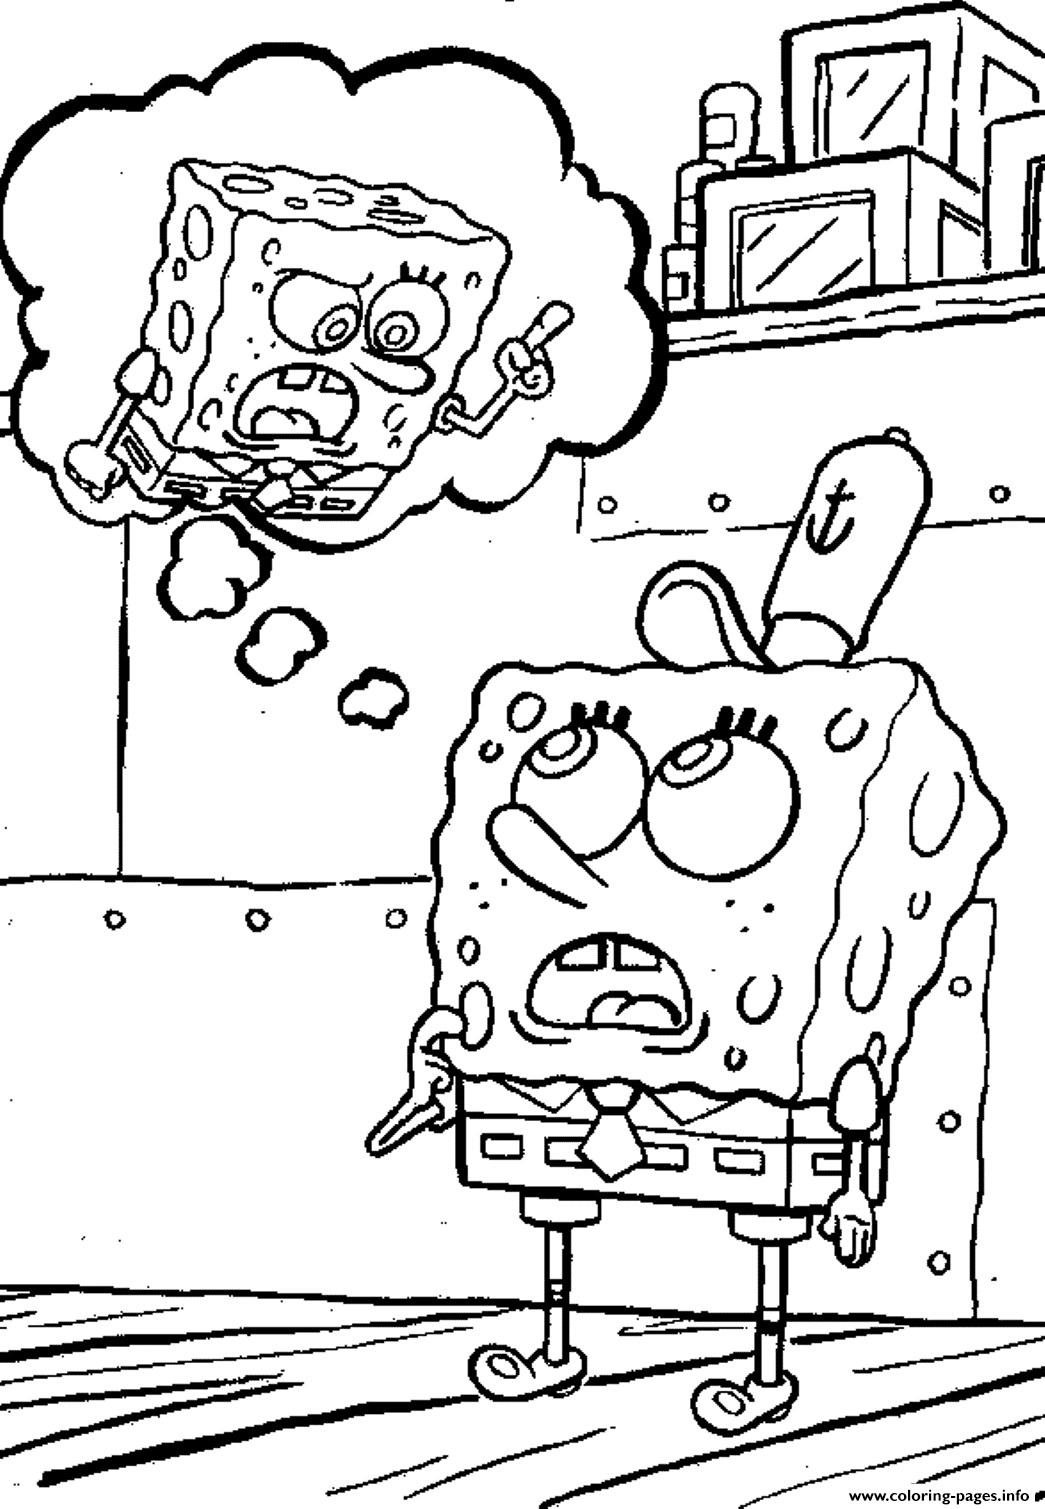 Spongebob S Free For Kidsb016 coloring